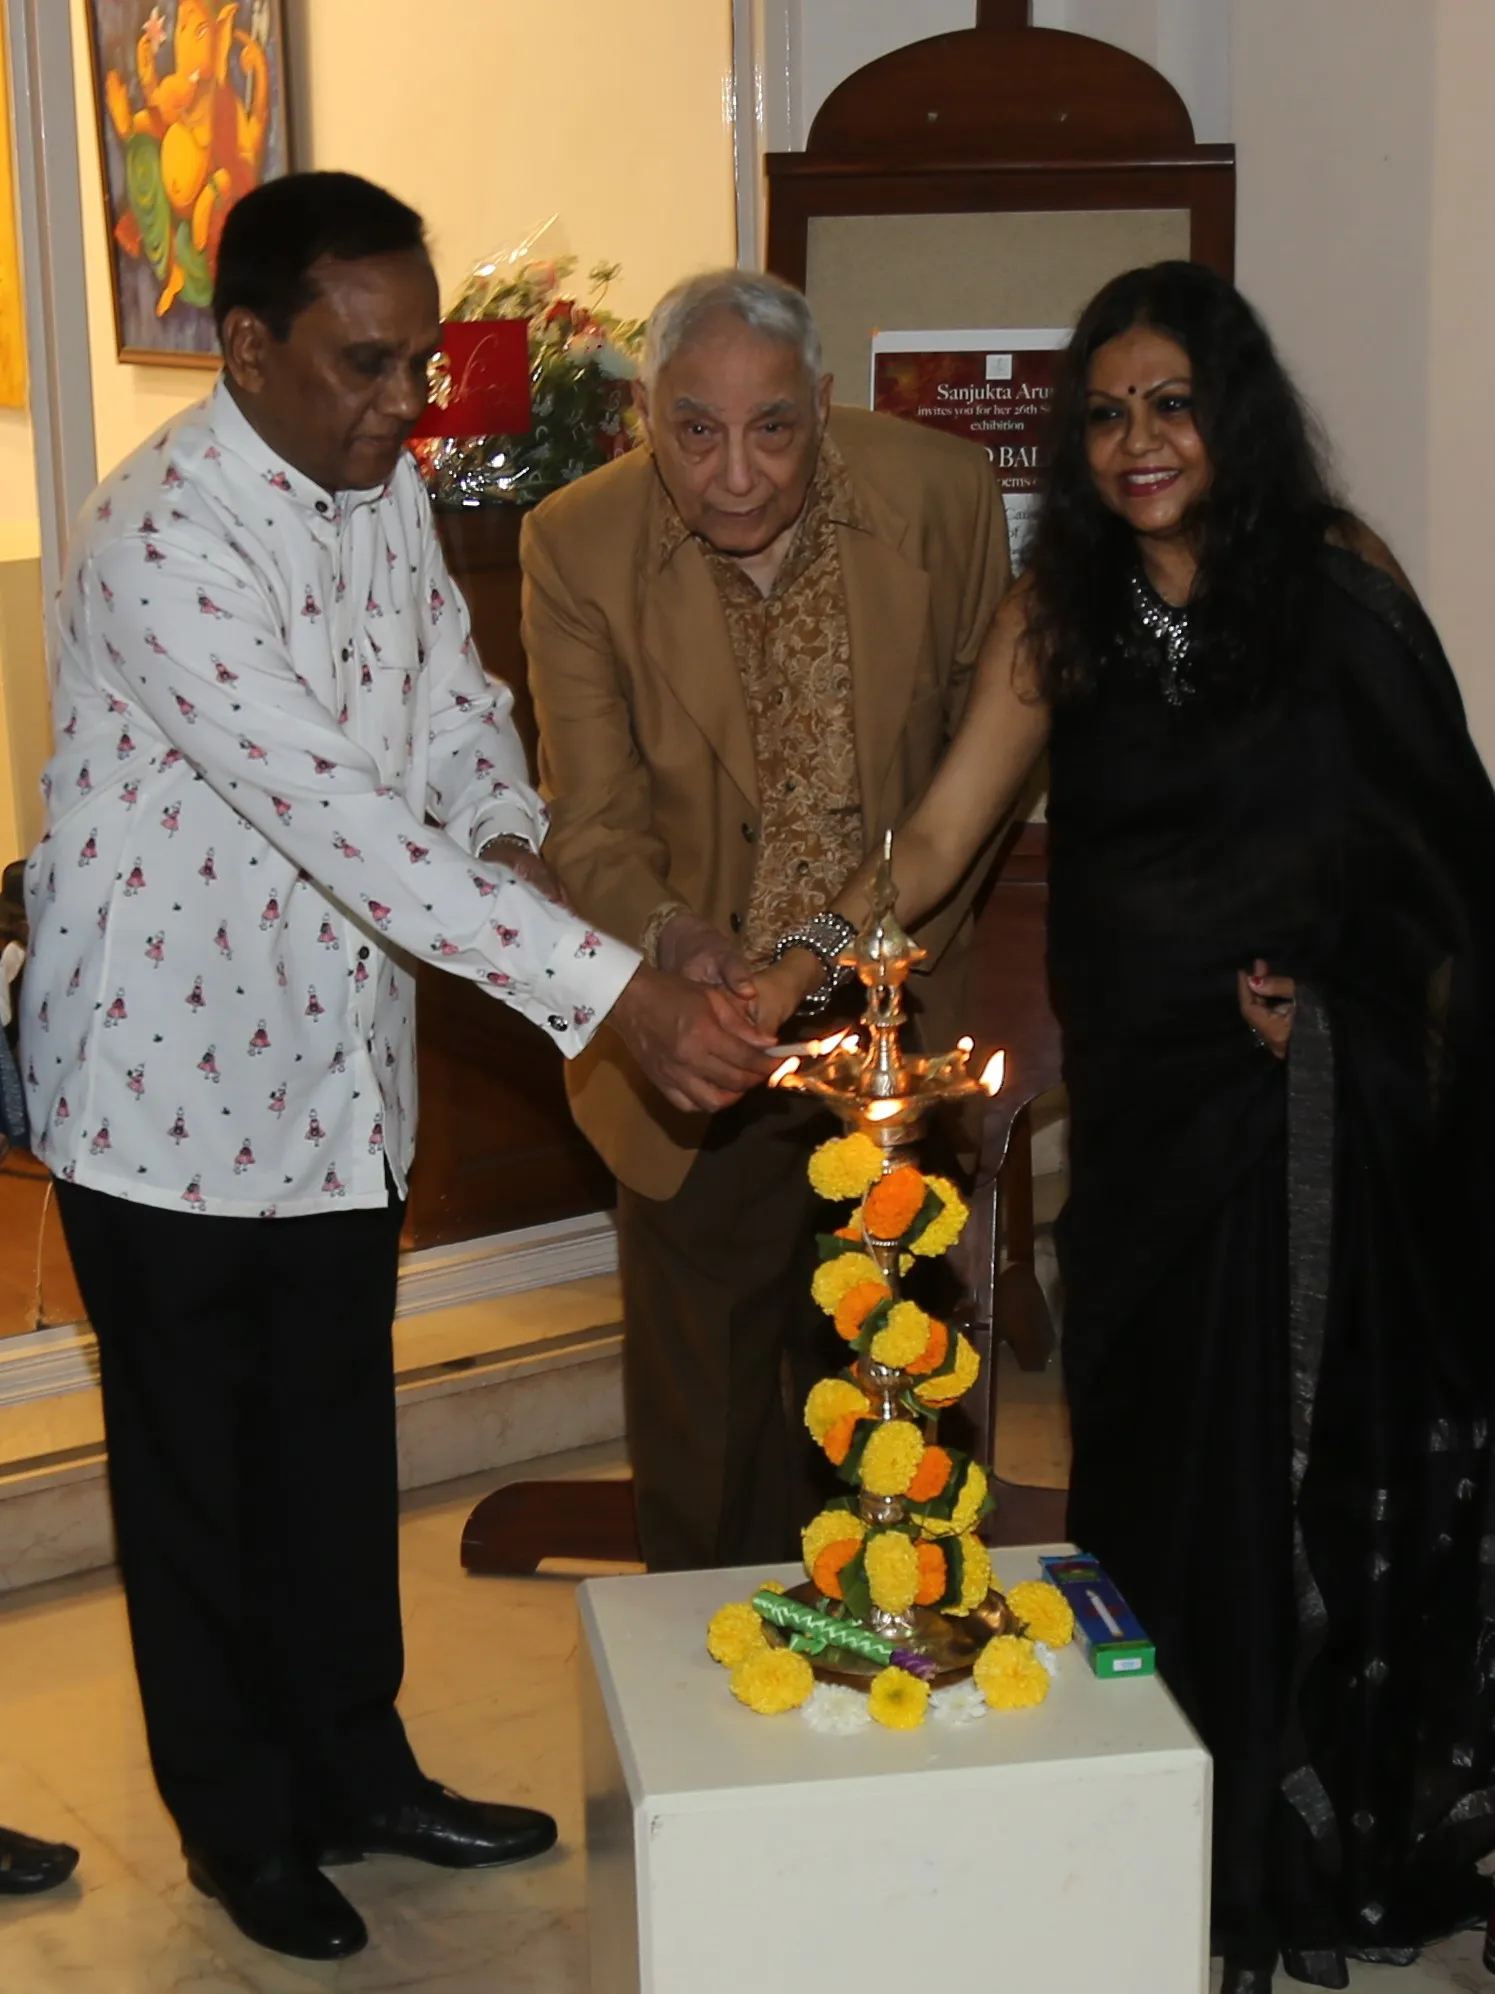 Ambassador Valsan Vethody, Yogendra Sapru, Founder-Chairman CPAA & Artist Sanjukta Arun lighting the lamp at Sanjukta Arun's Painted Ballads exhibition